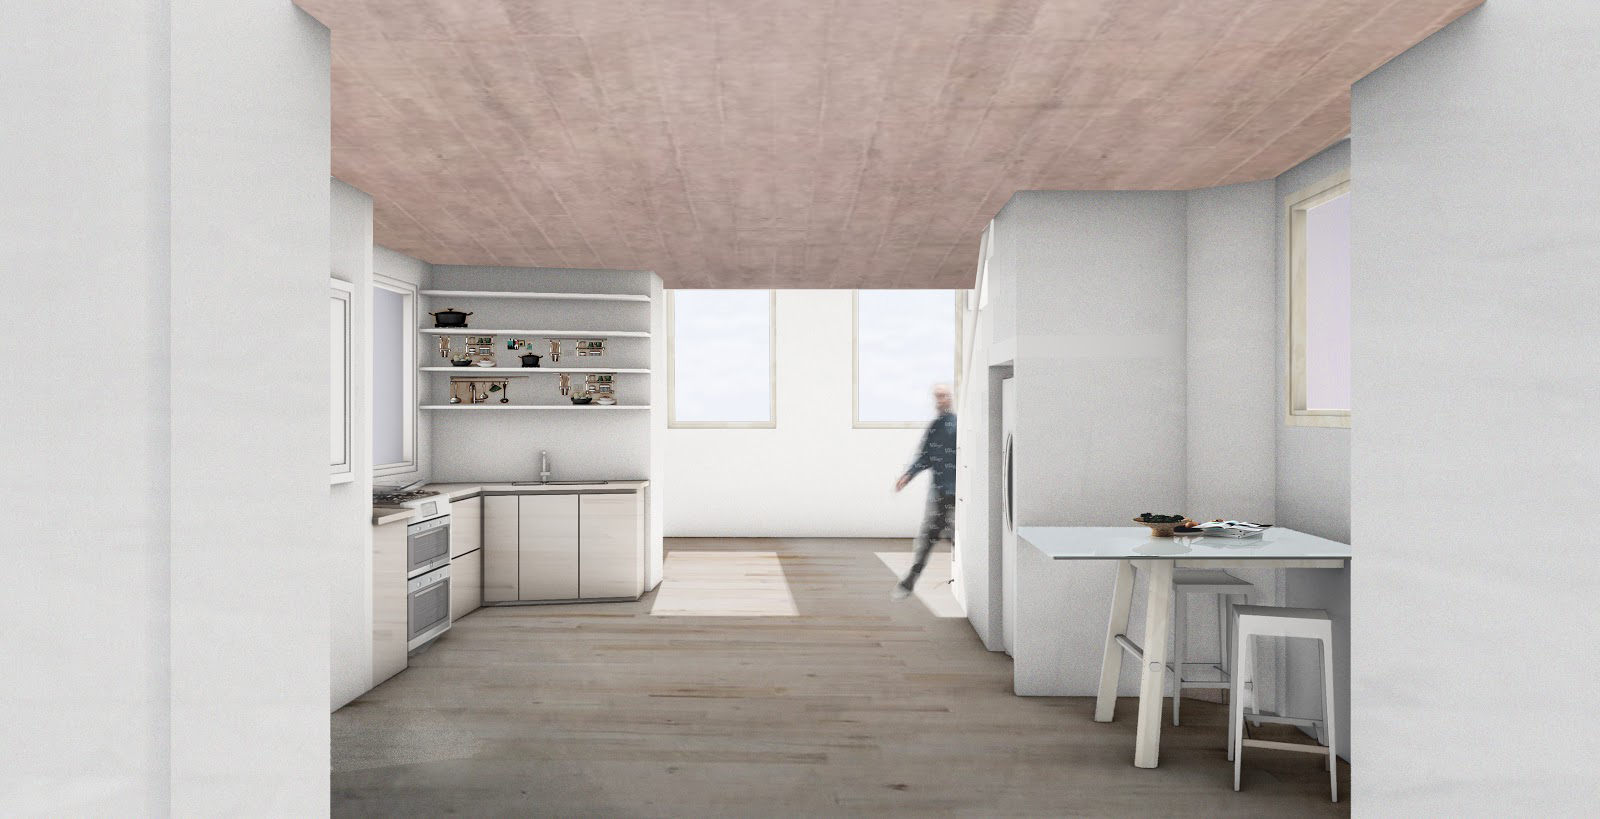 Apartment kitchen rendering